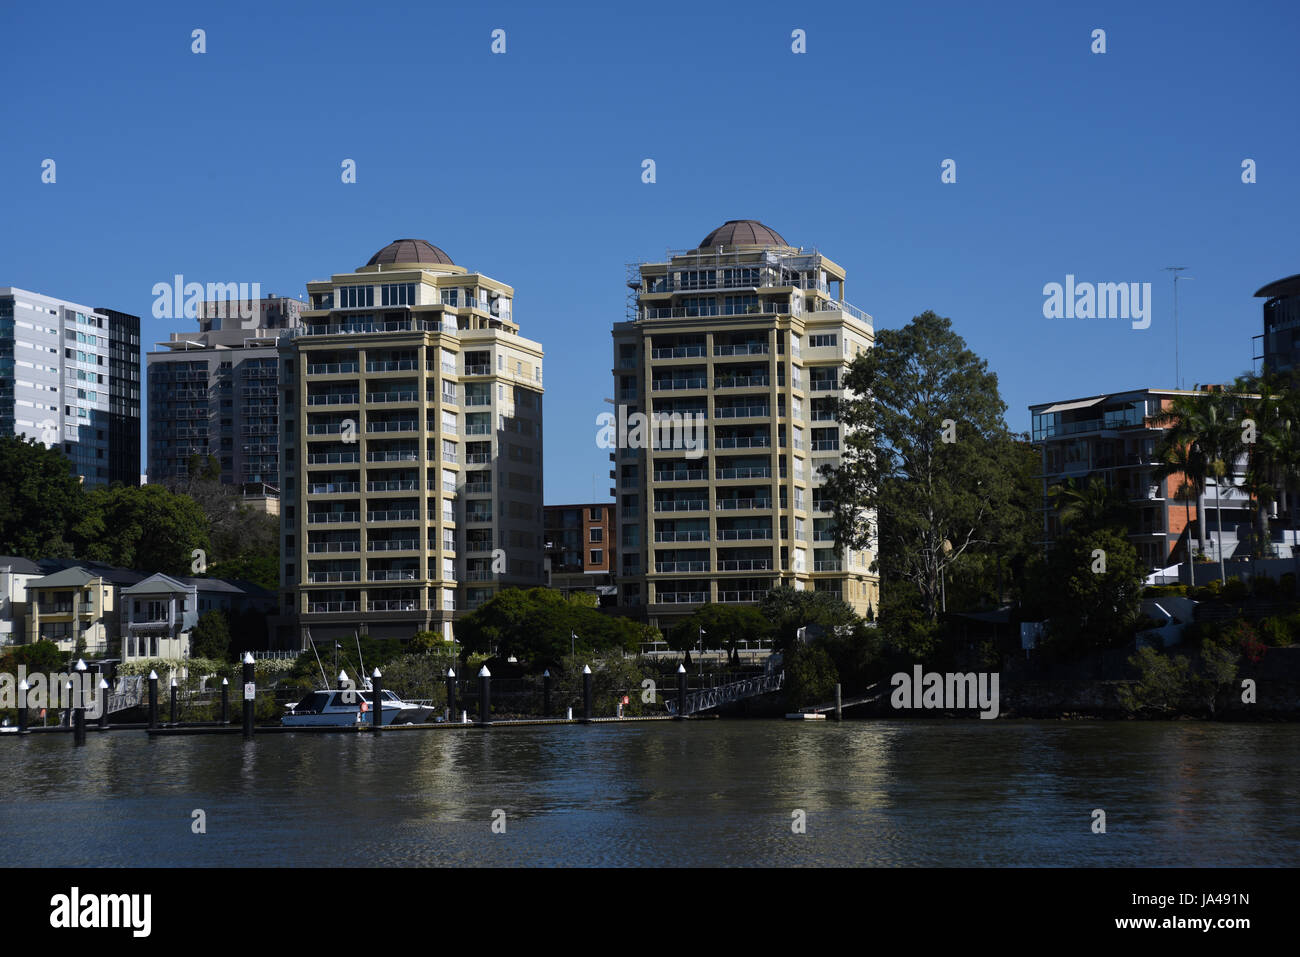 Kangaroo Point, Brisbane, Australia: High-rise apartment buildings lining the Brisbane River Stock Photo